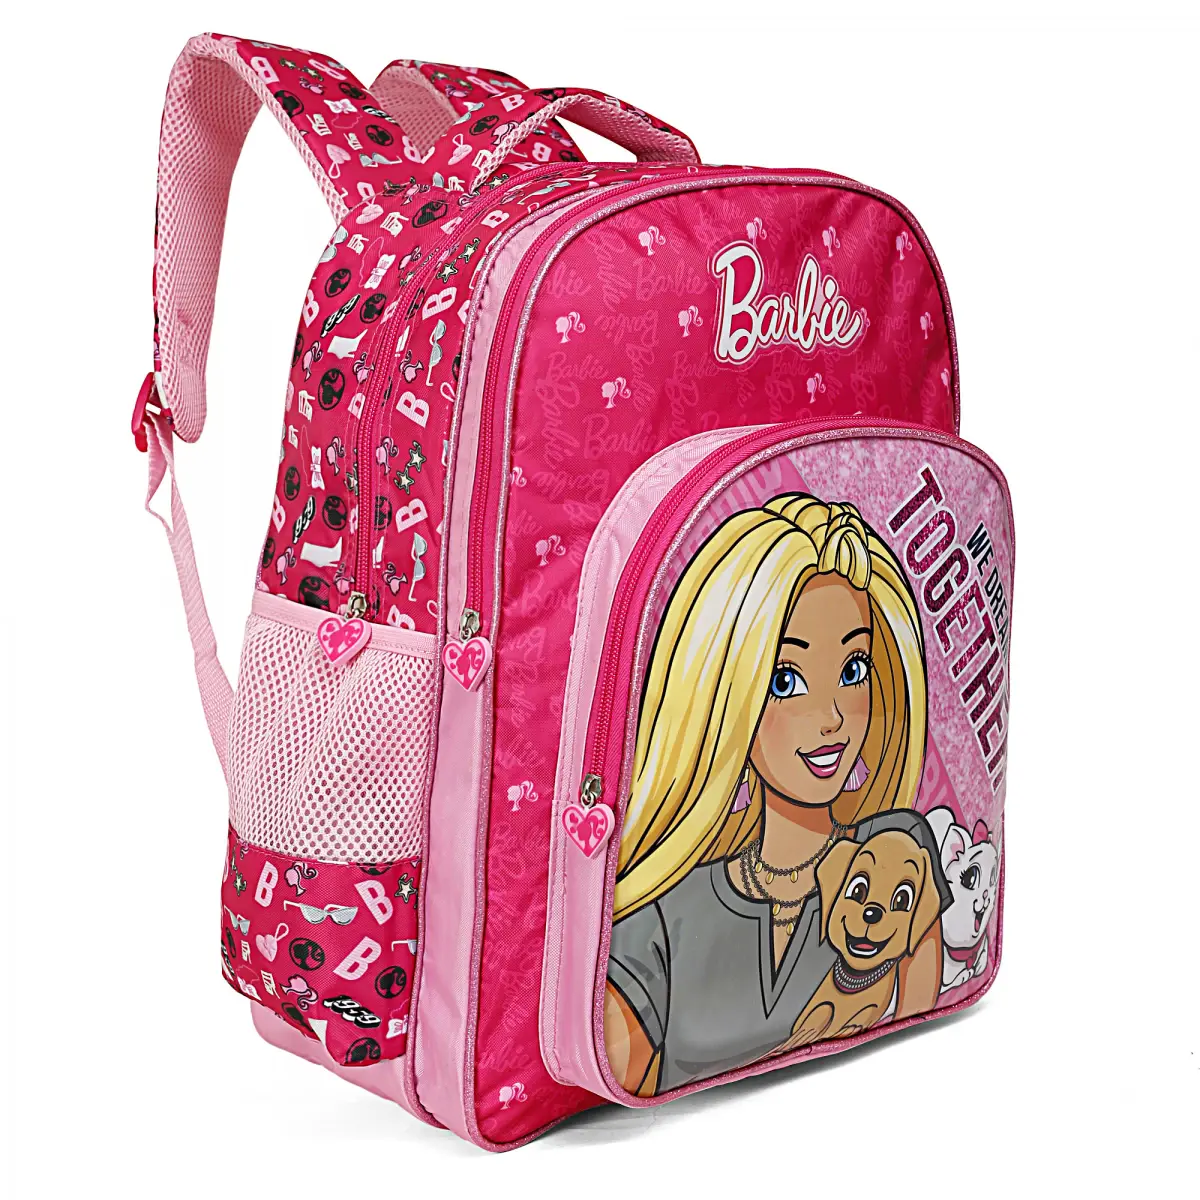 Barbie Beautiful School Bag Pack, Pink, 12Inches, 16Y+